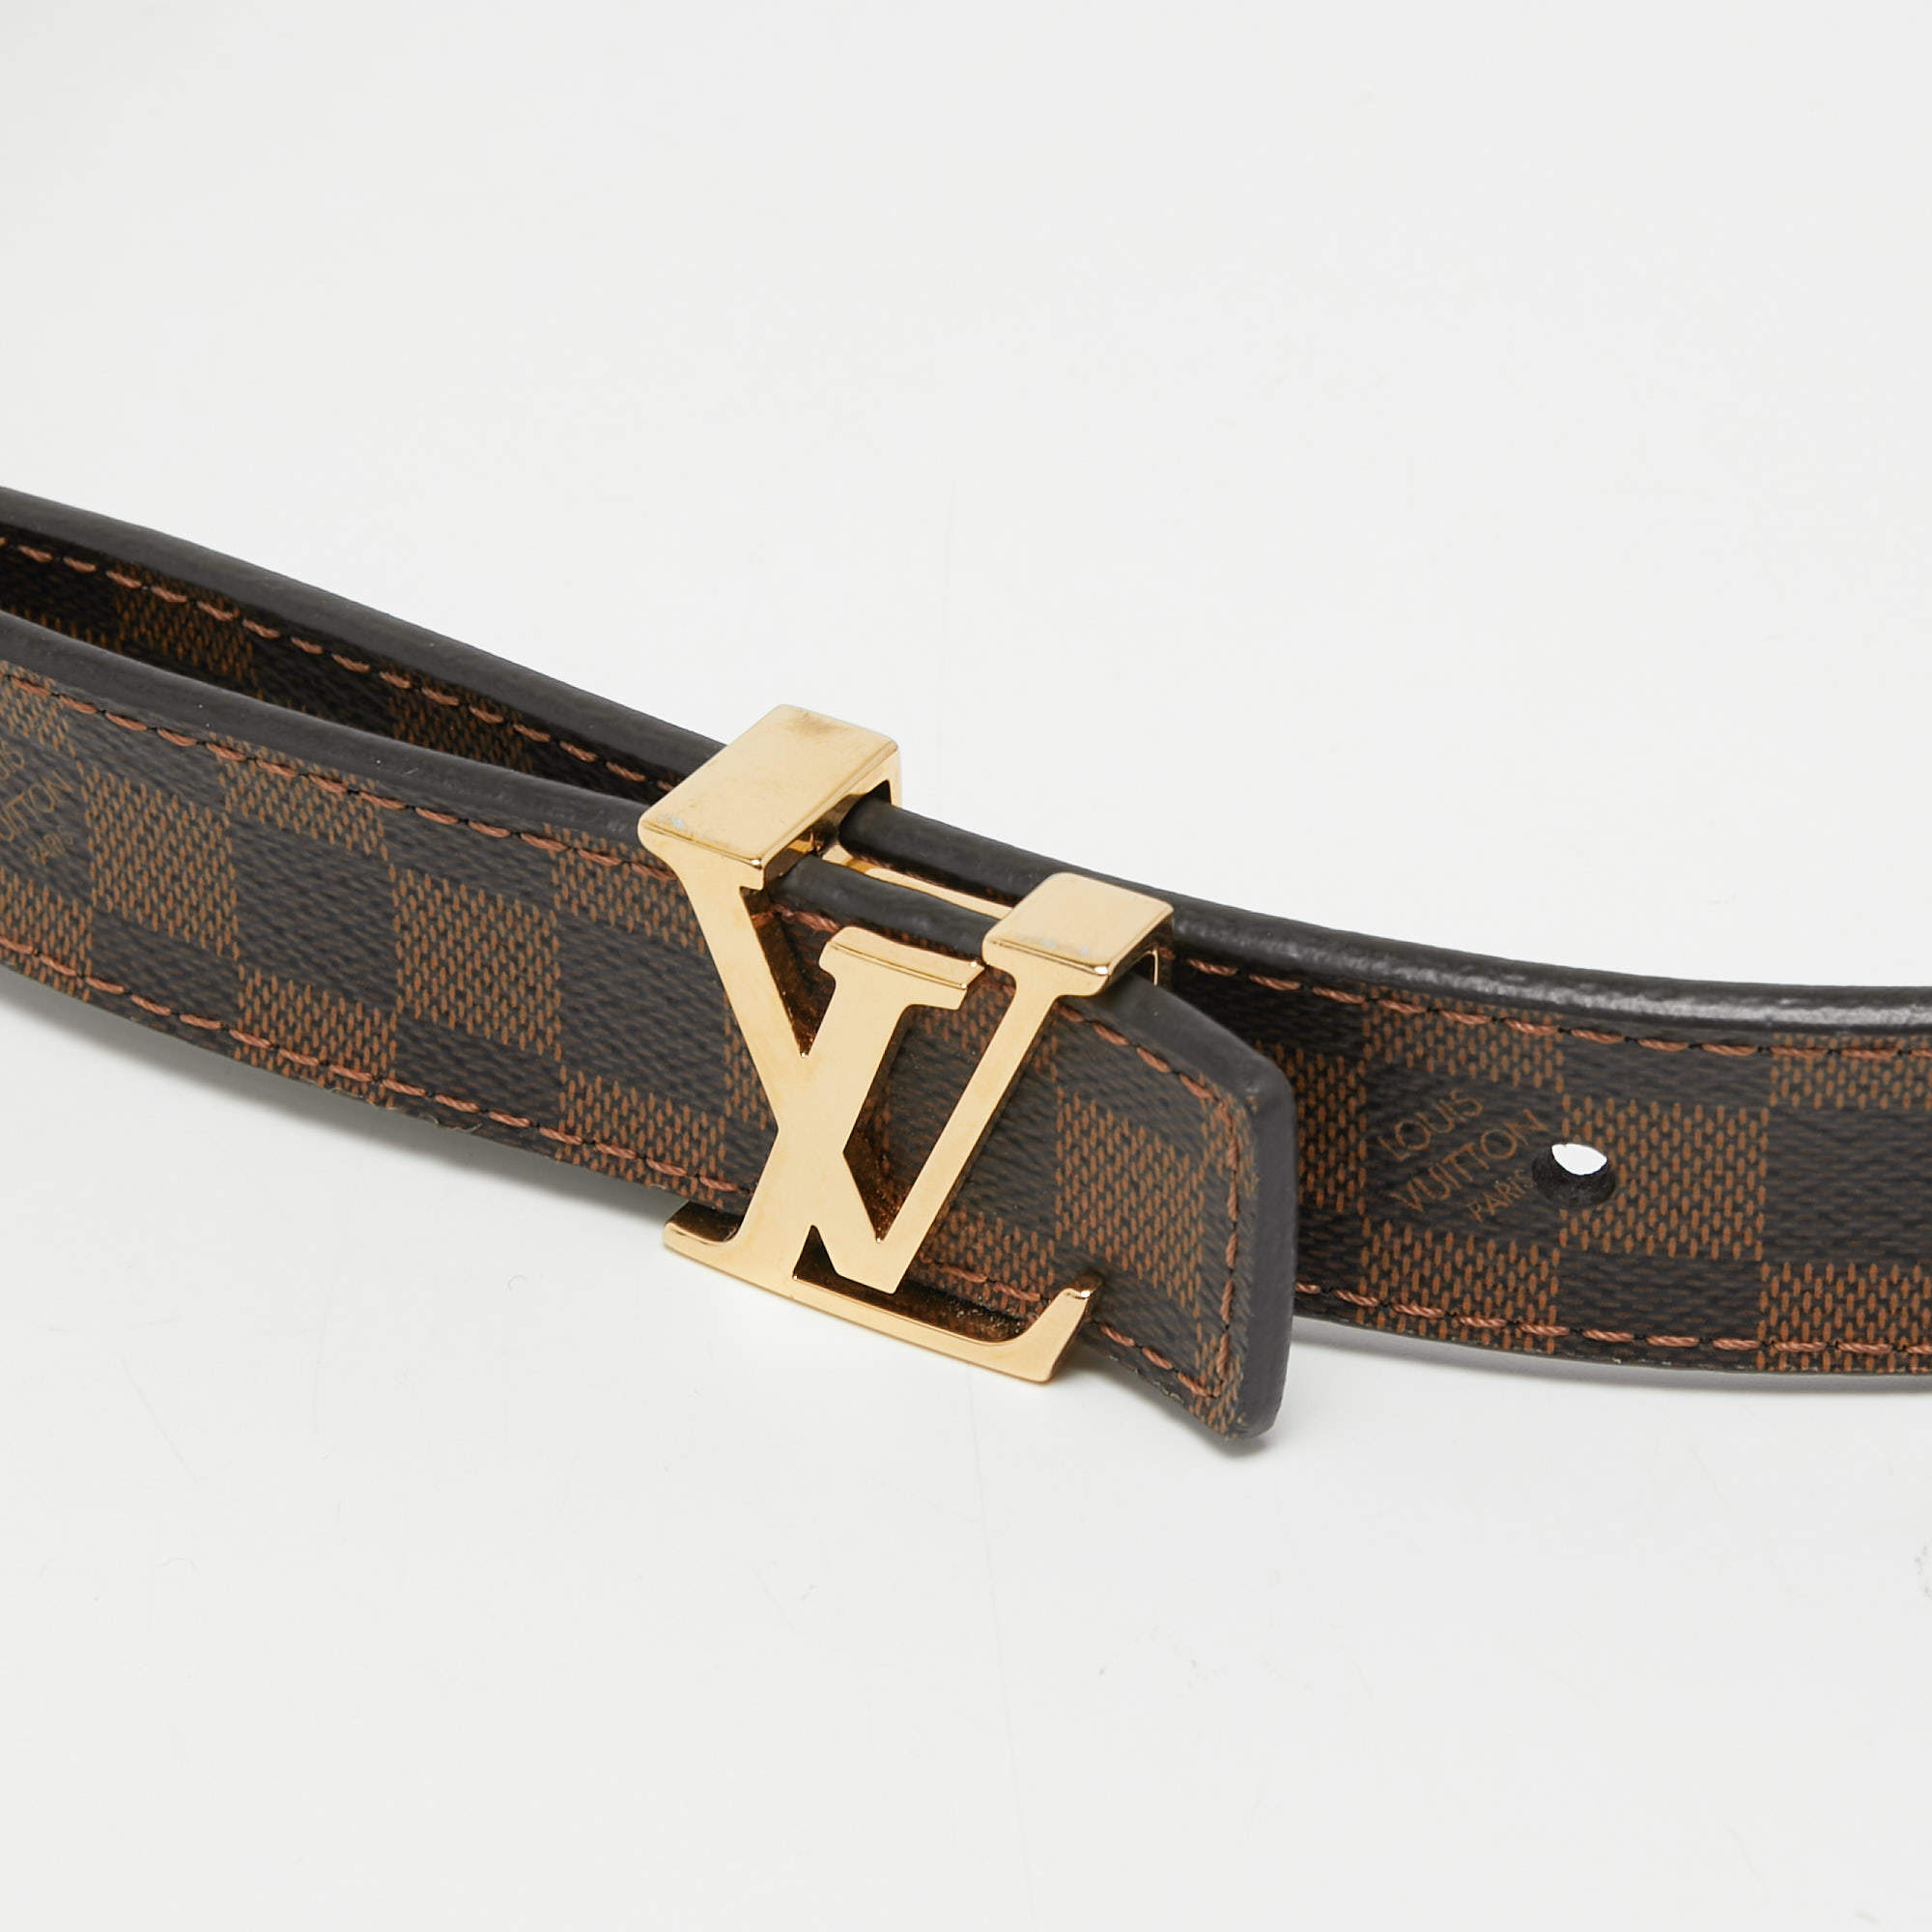 Louis Vuitton Damier Ebene Mini 25mm Belt 80 32 580838